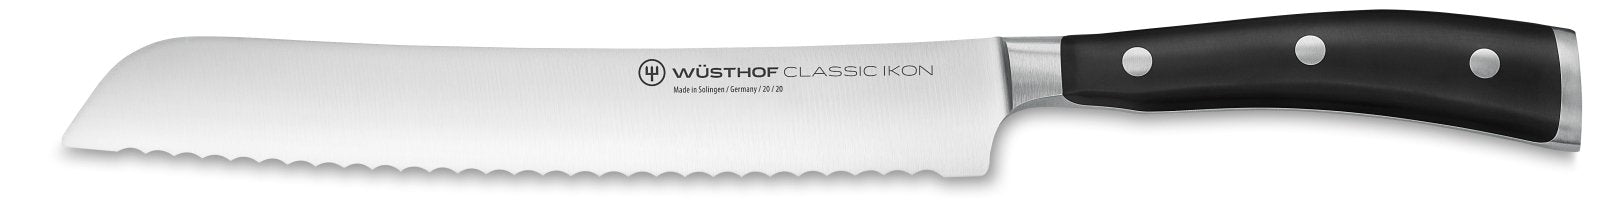 Wusthof Classic IKON 6 Piece Block Set - Black Ash - WT1090370601 - The Cotswold Knife Company